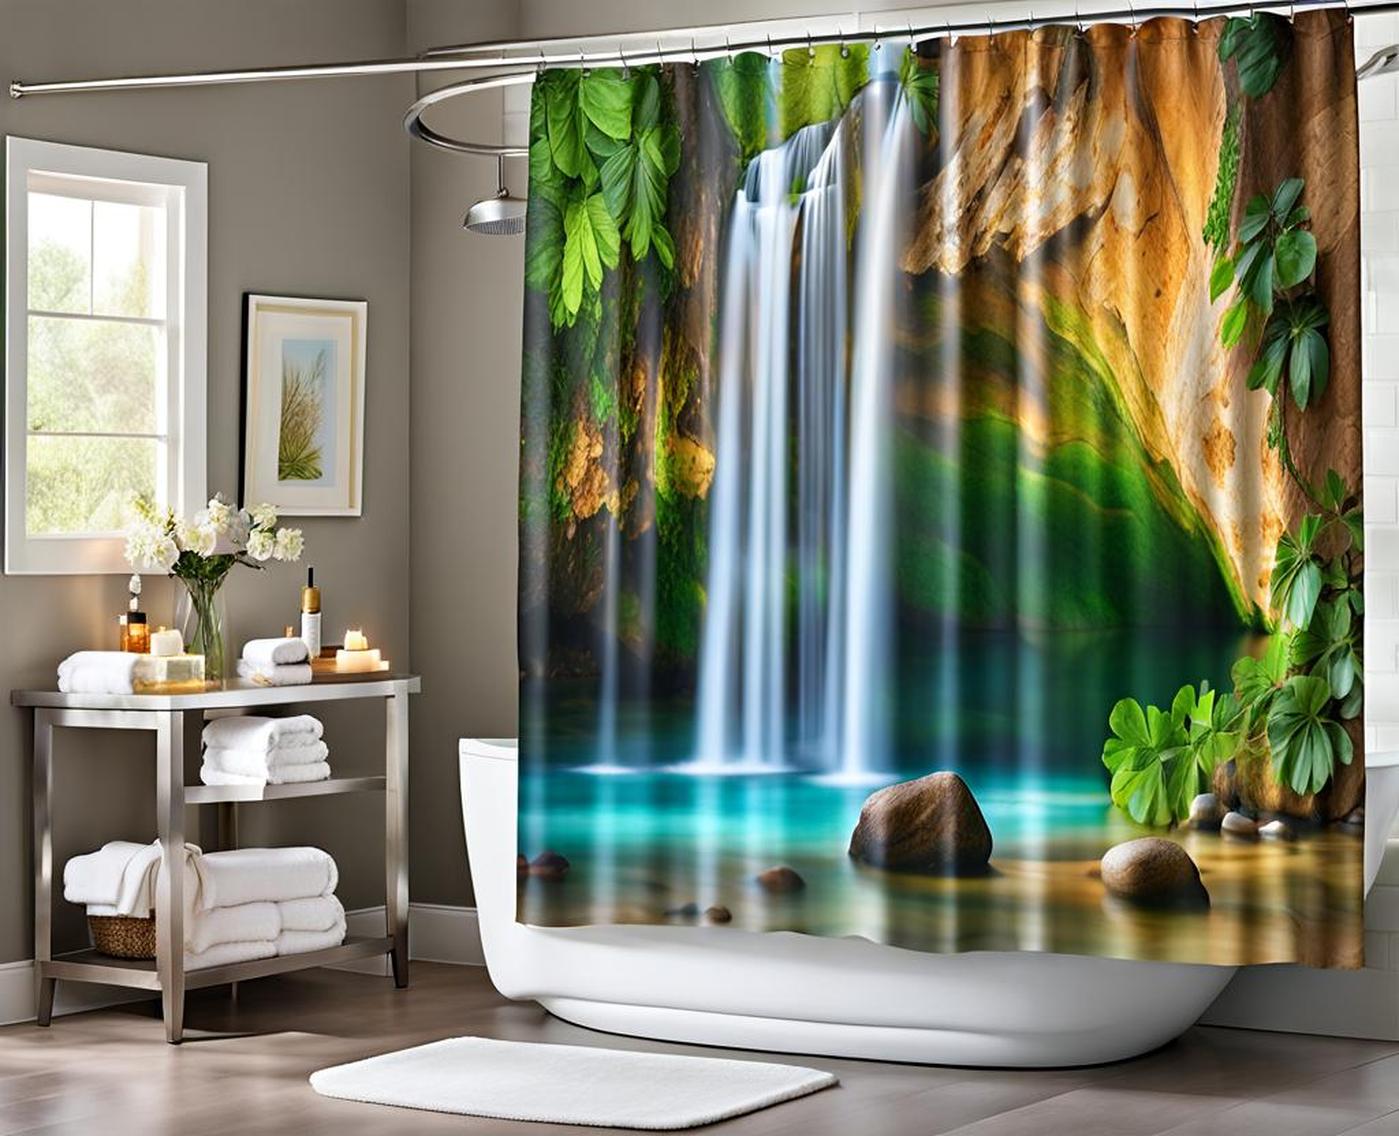 spa like shower curtains